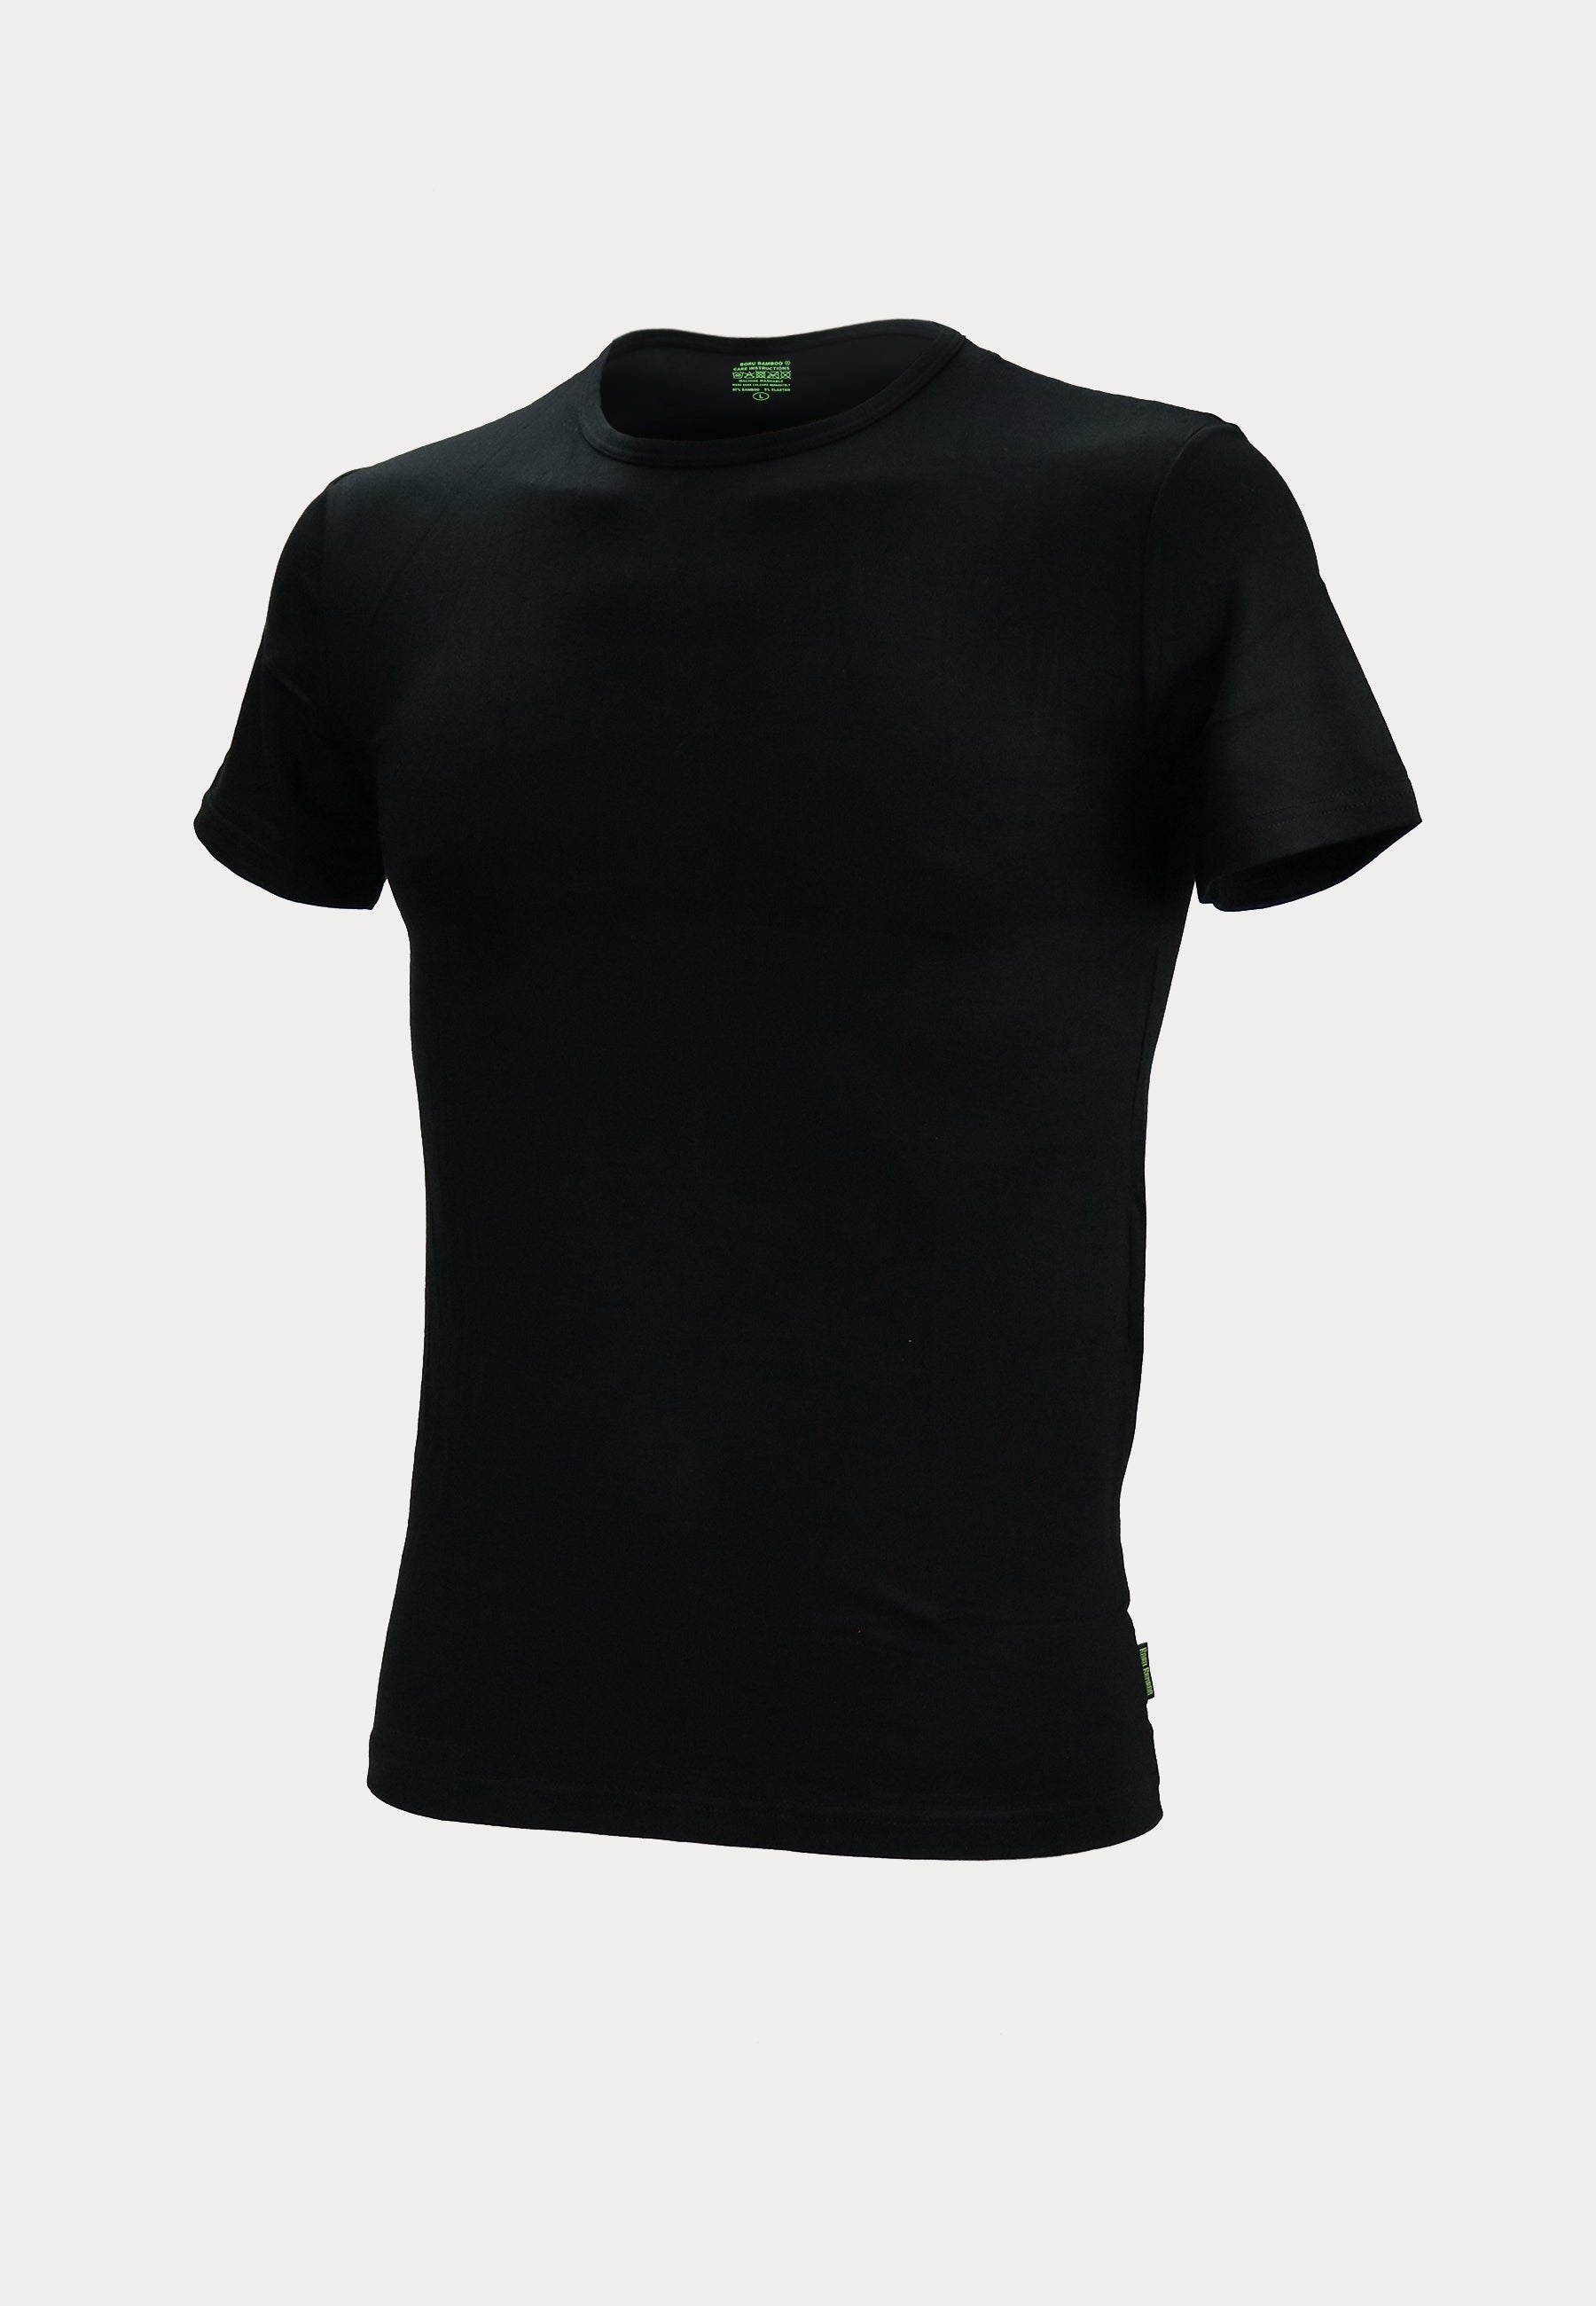 Zwarte bamboe T-shirt van het merk Boru Bamboe.